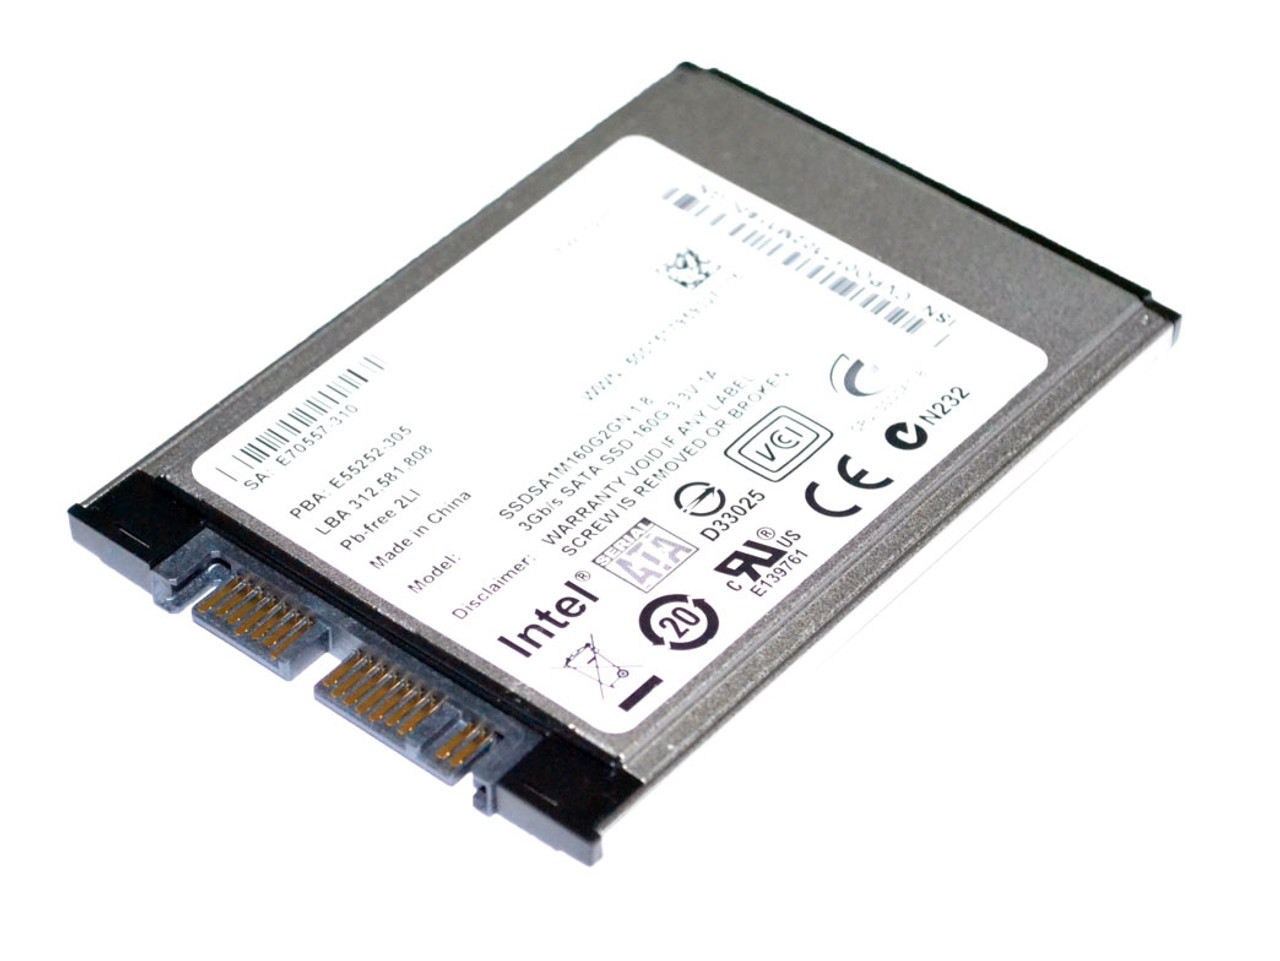 SATA SSD - 1.8 SATA III SSD - MagicRAM, Inc - internal / 1.8